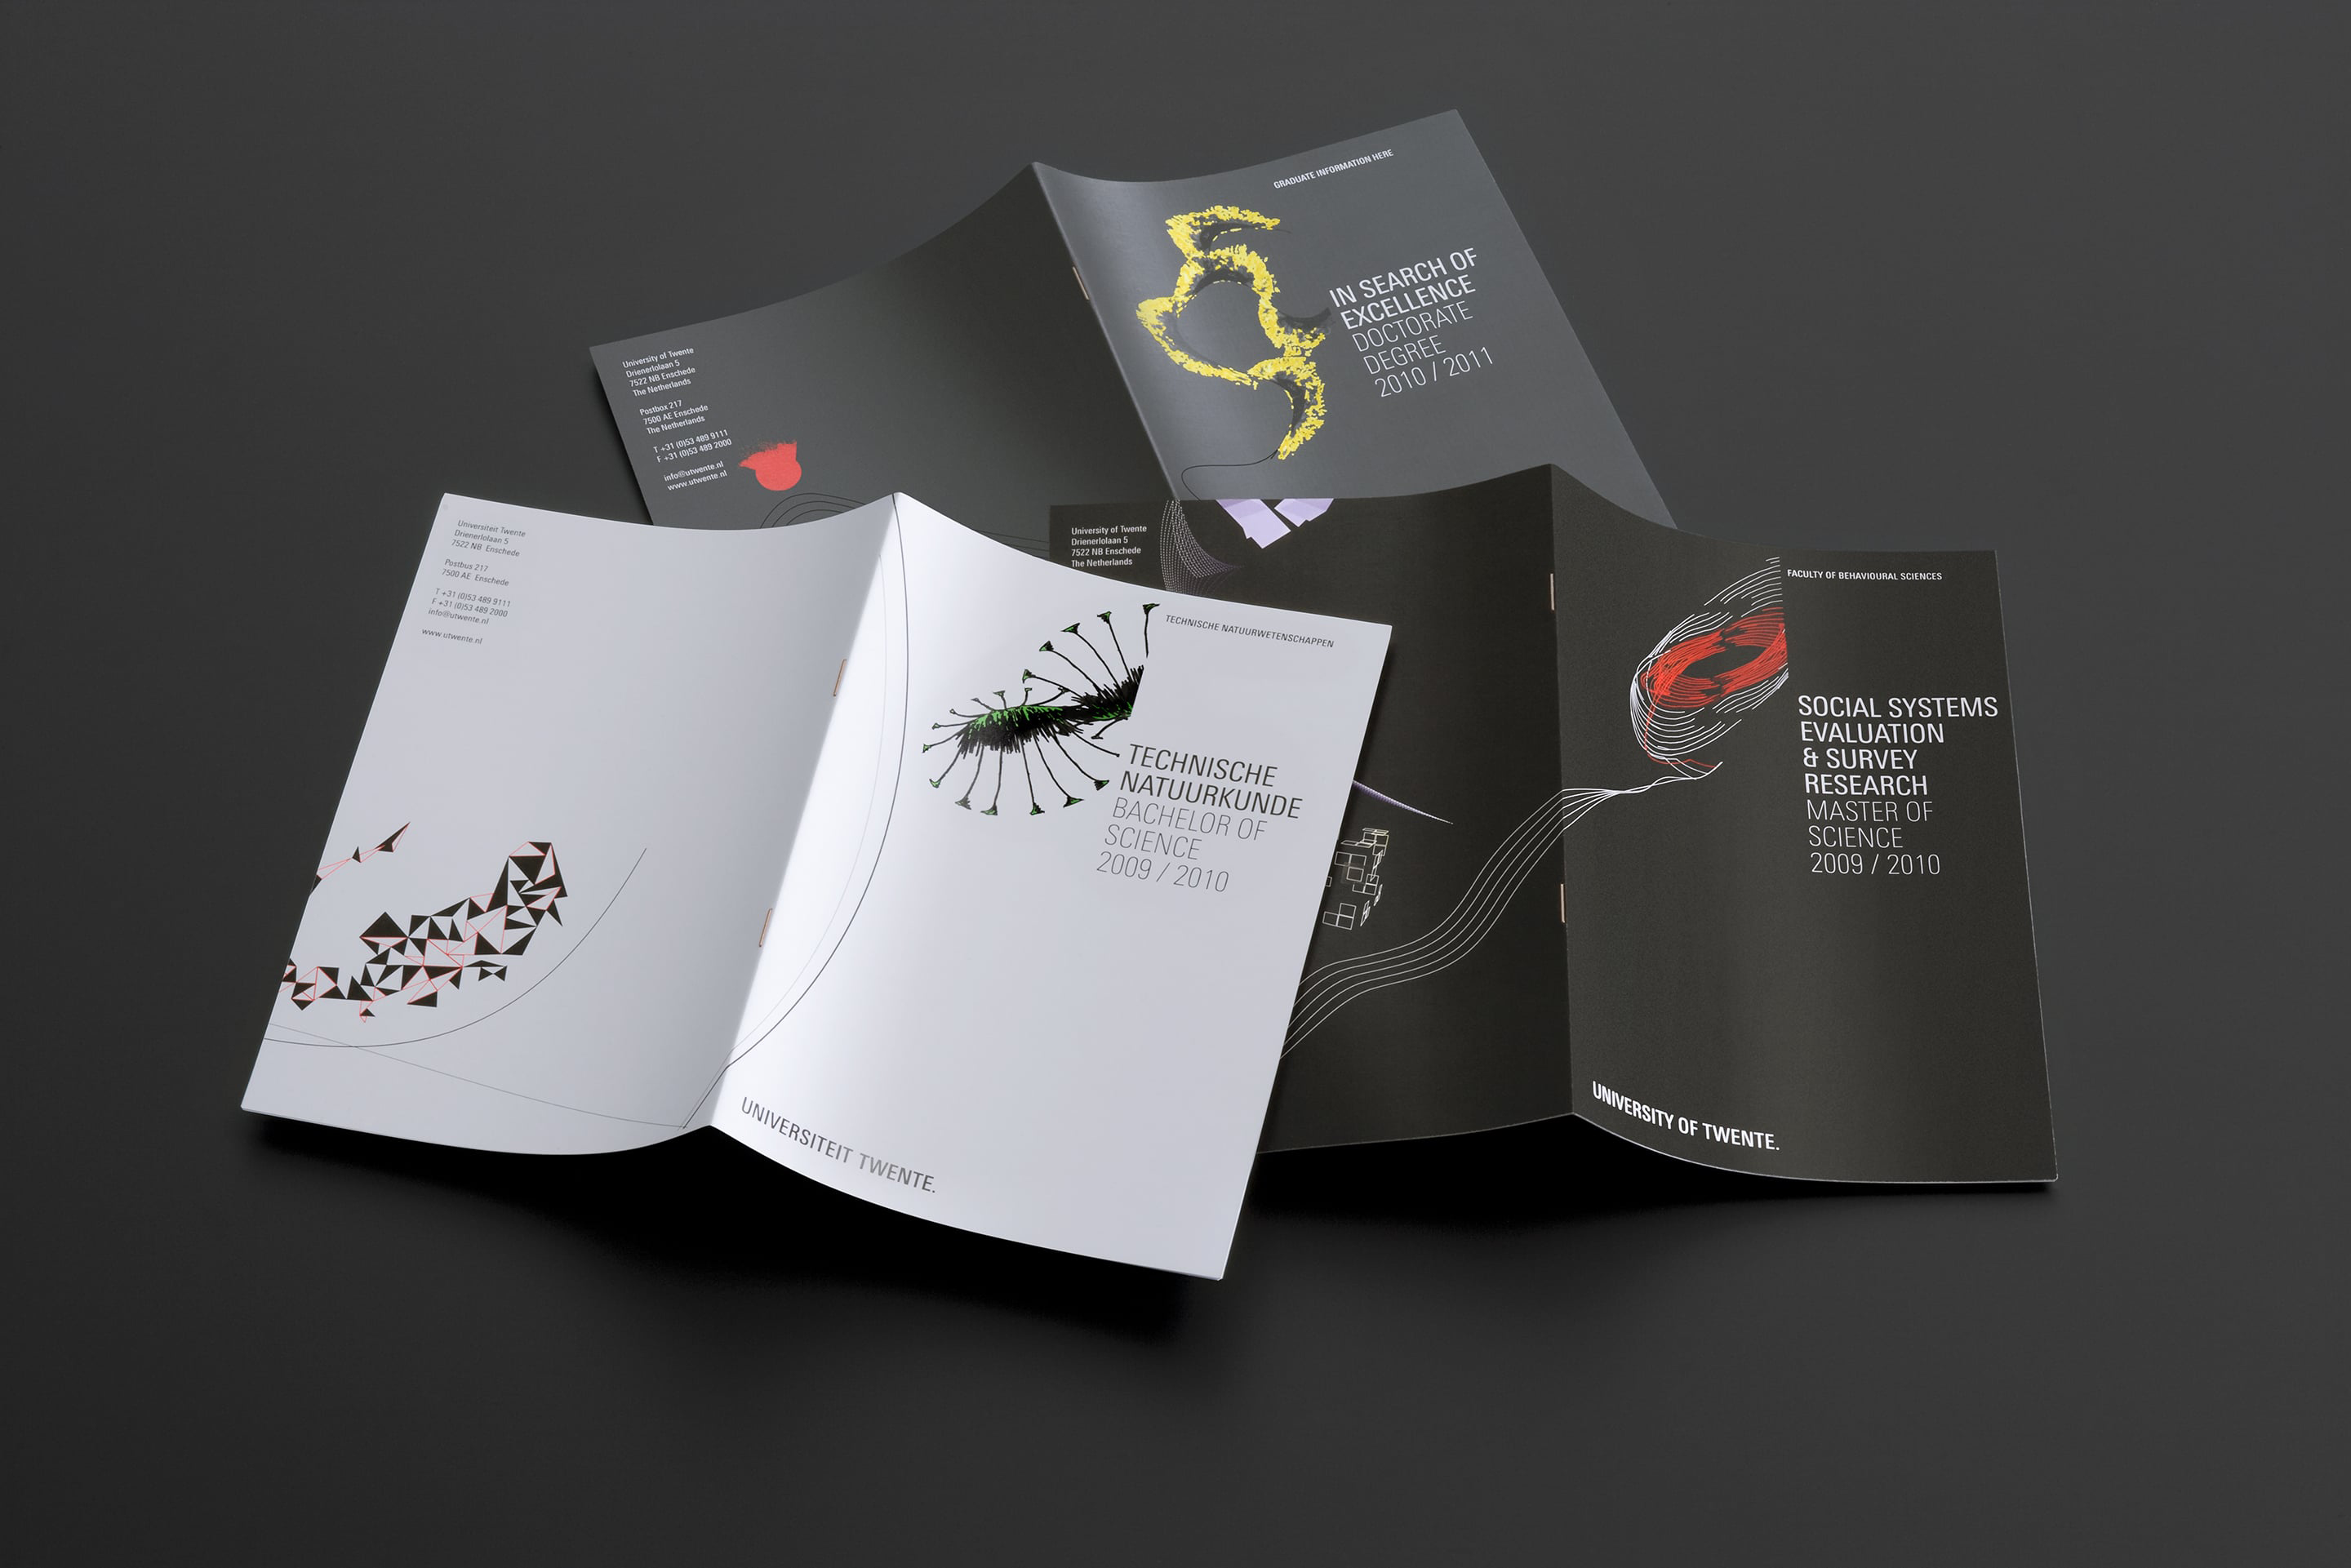 studio dumbar design visual brand identity for University of Twente masters batchelors and phd brochure design with universe